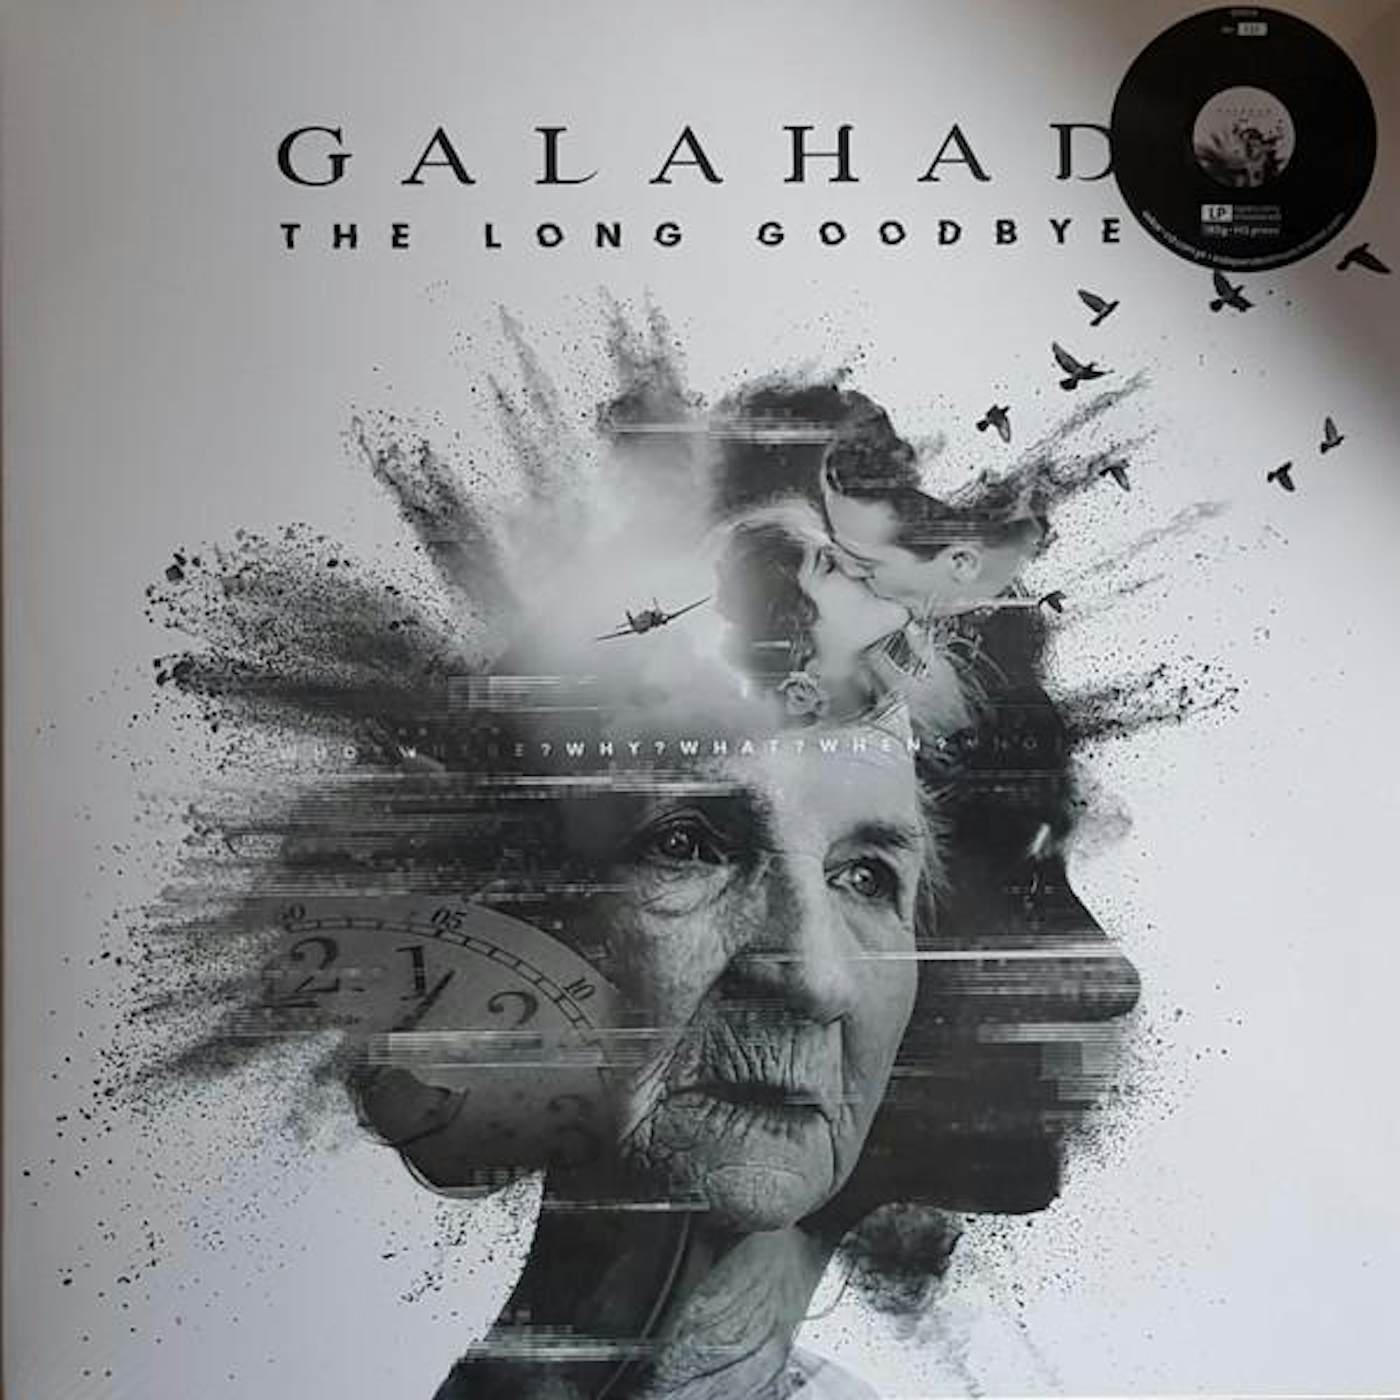 Galahad LONG GOODBYE Vinyl Record